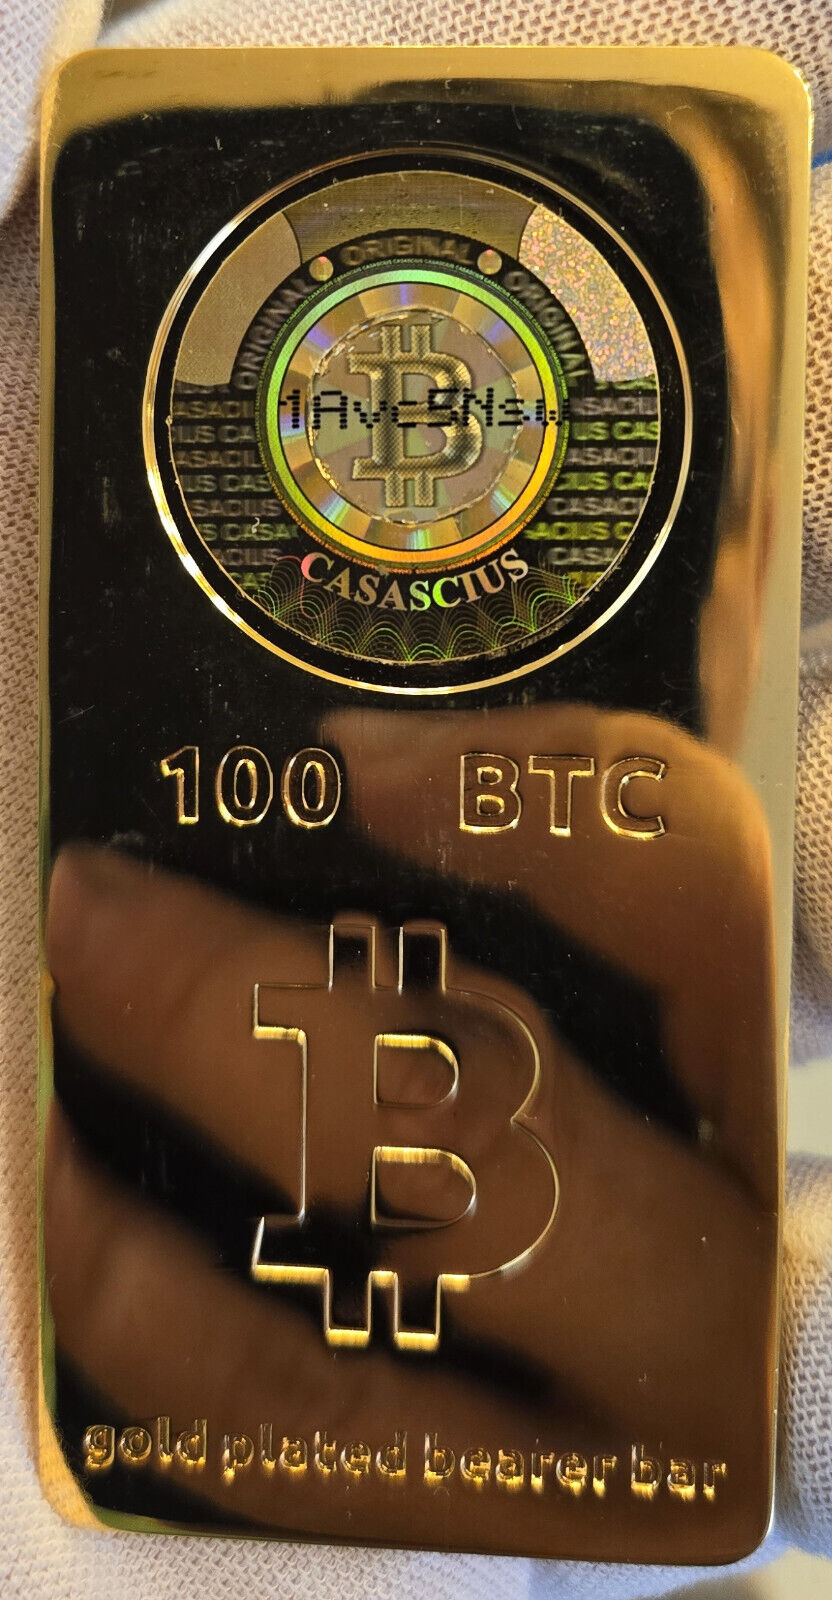 100 BTC 2011 - 1Avc5Nsw - 1st Edition Casascius (Redeemed) Gold Plated Bitcoin